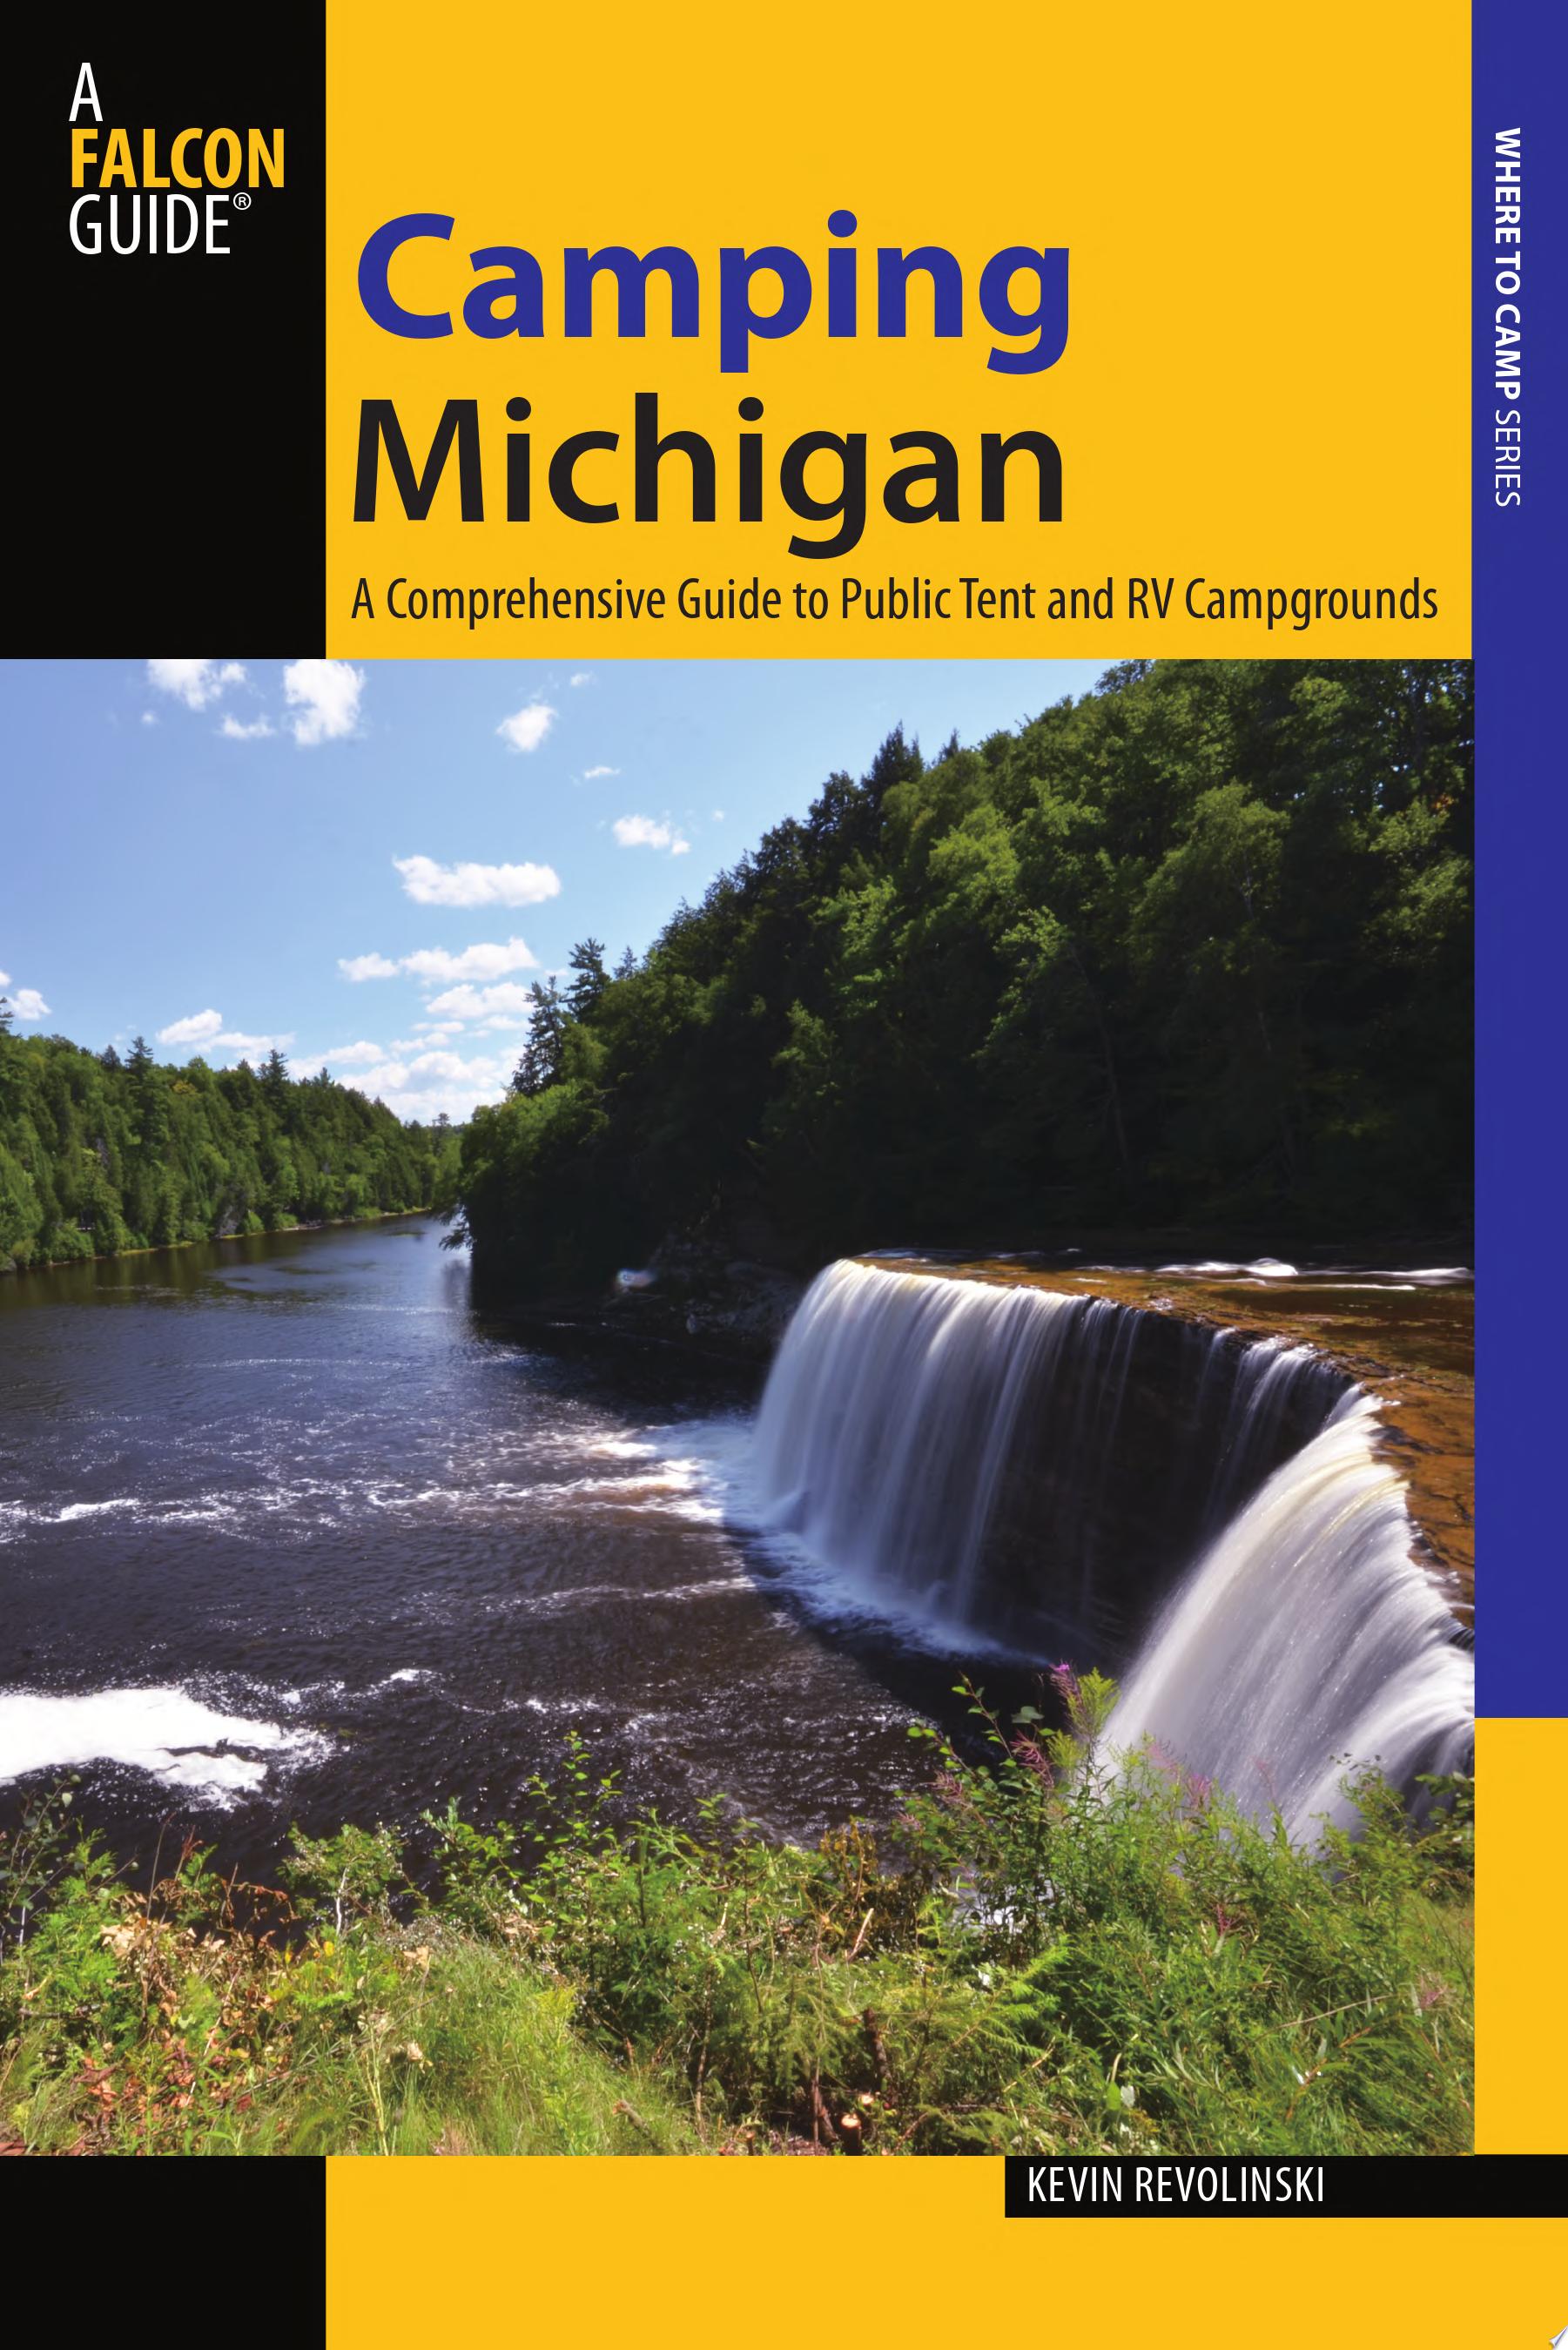 Image for "Camping Michigan"